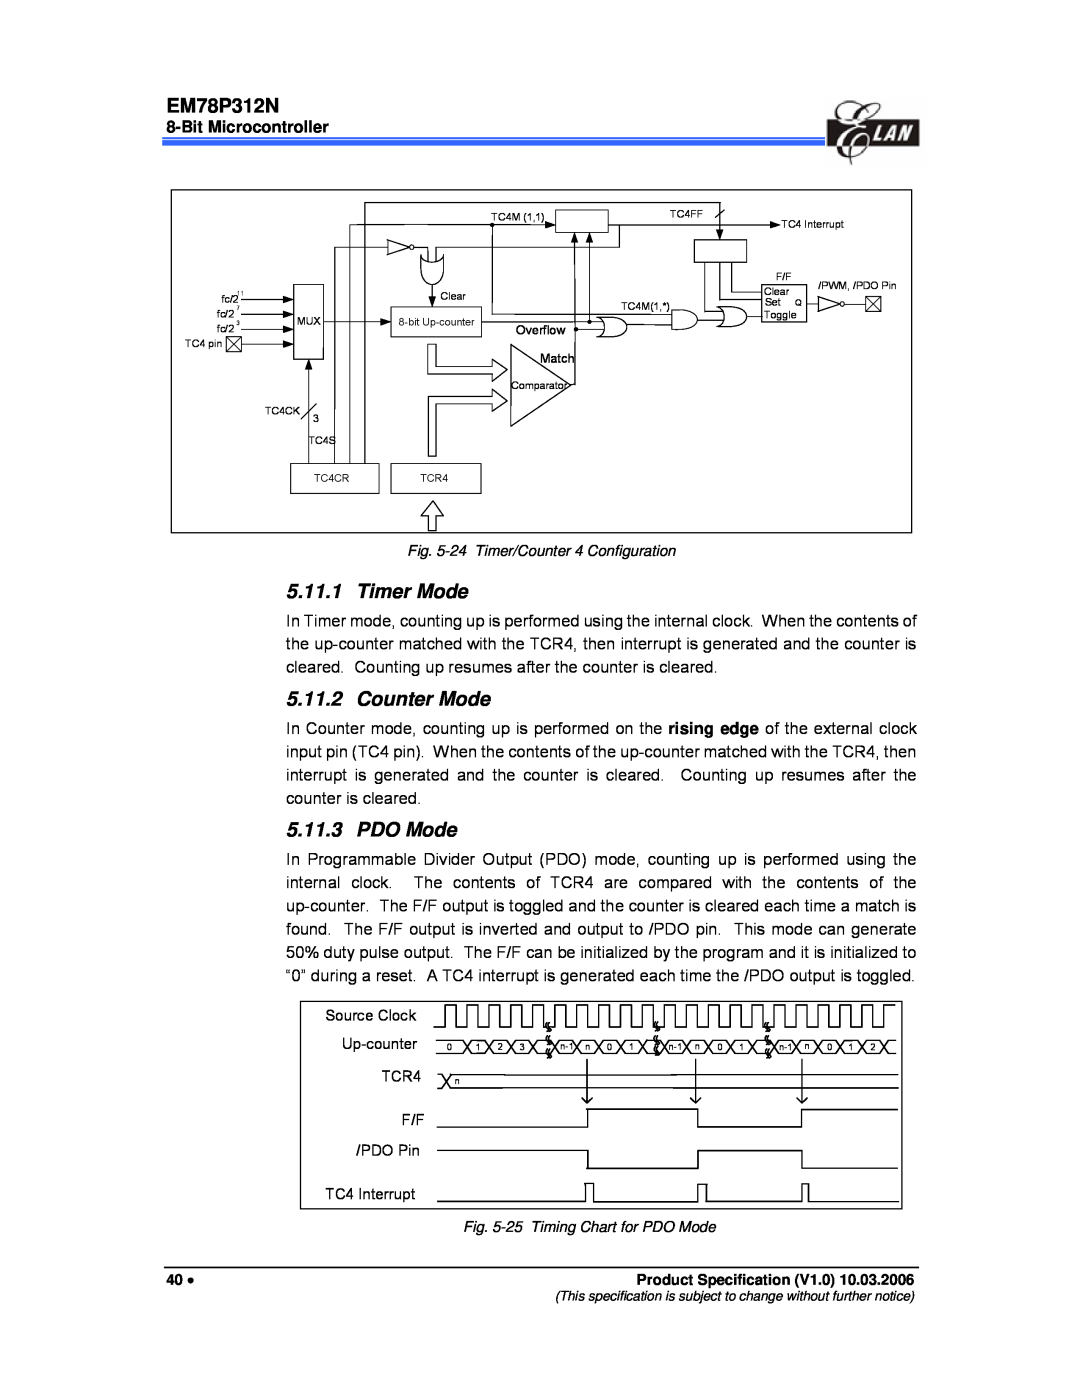 IBM EM78P312N manual Timer Mode, Counter Mode, PDO Mode, Bit Microcontroller 